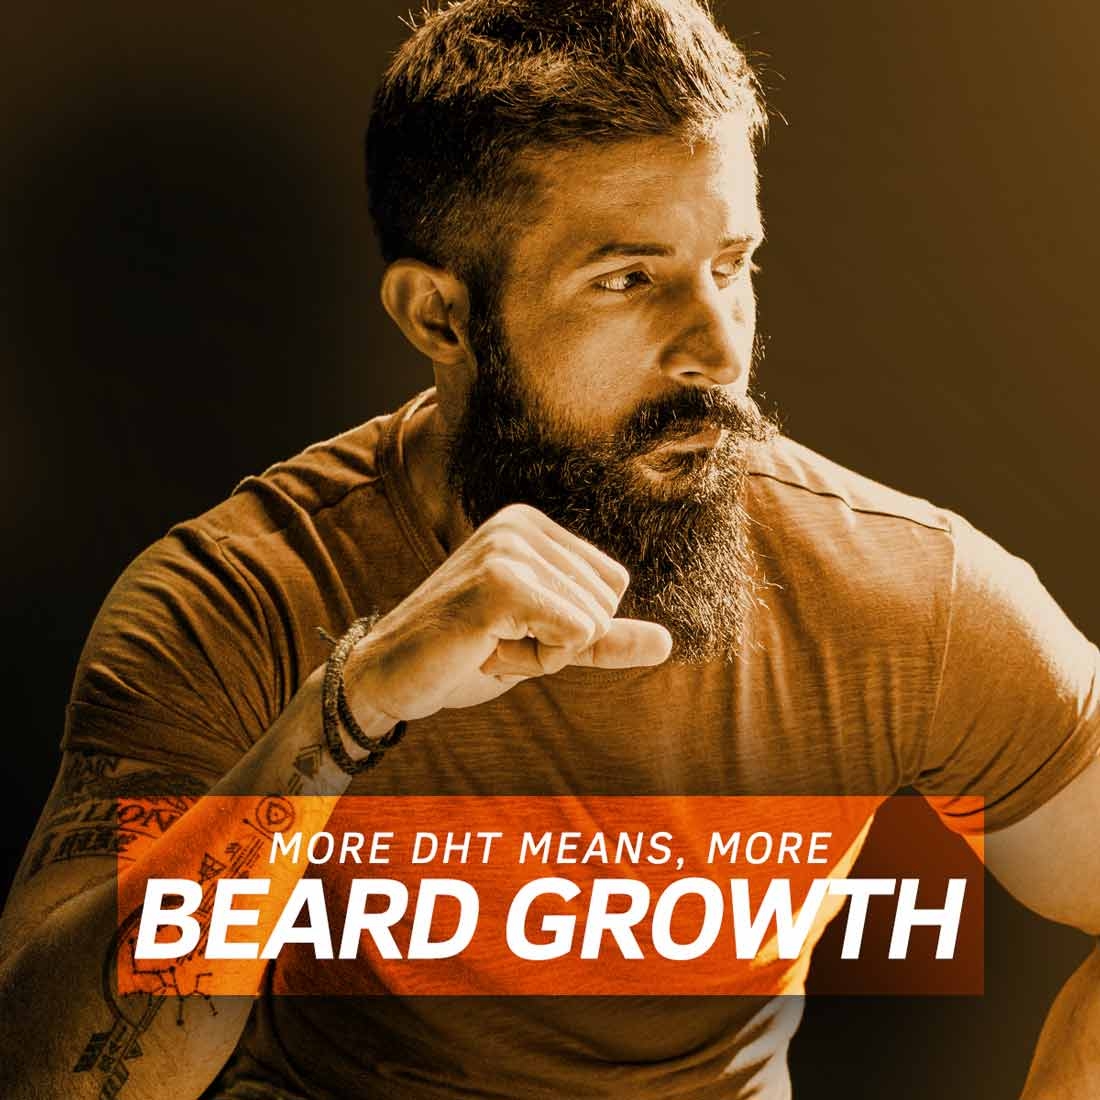 Ustraa Beard growth Oil - Advanced Set Of 2